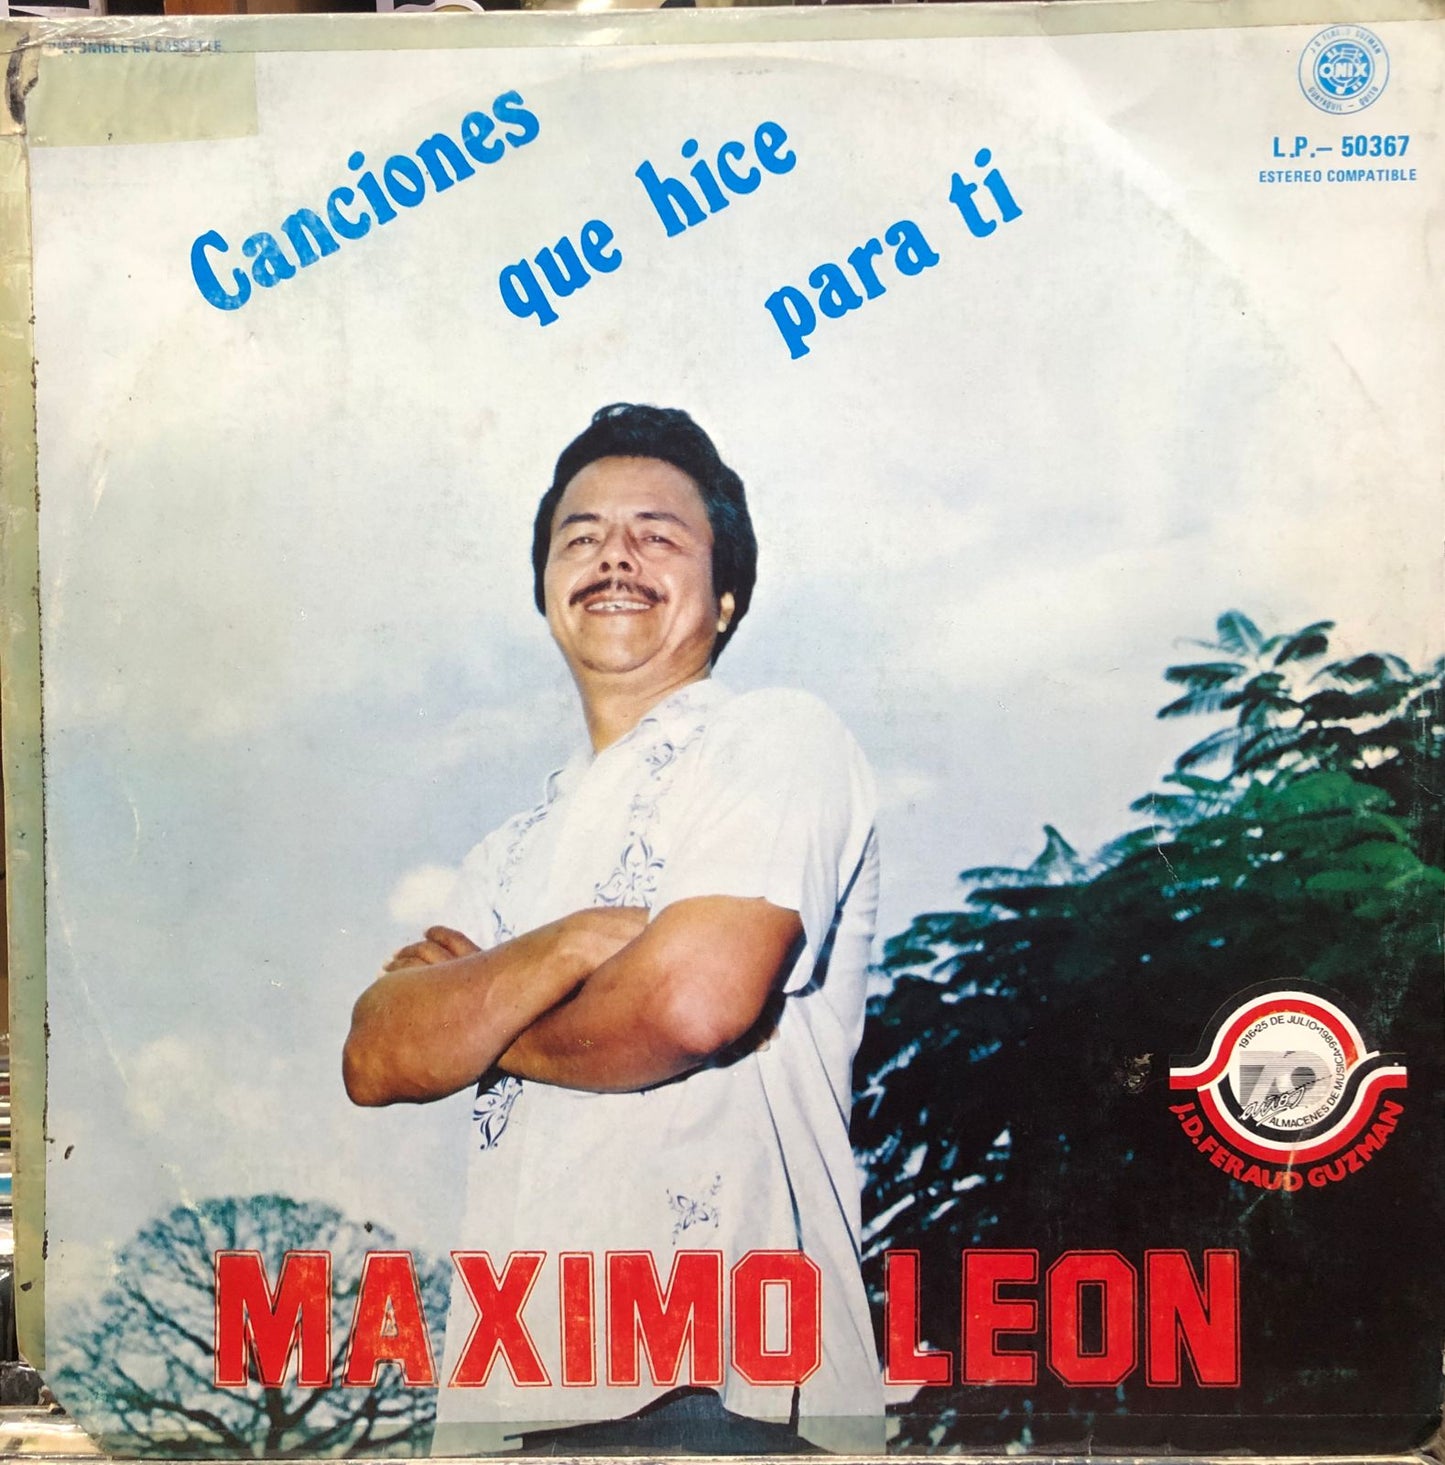 MAXIMO LEON - CANCIONES QUE HICE PARA TI LP